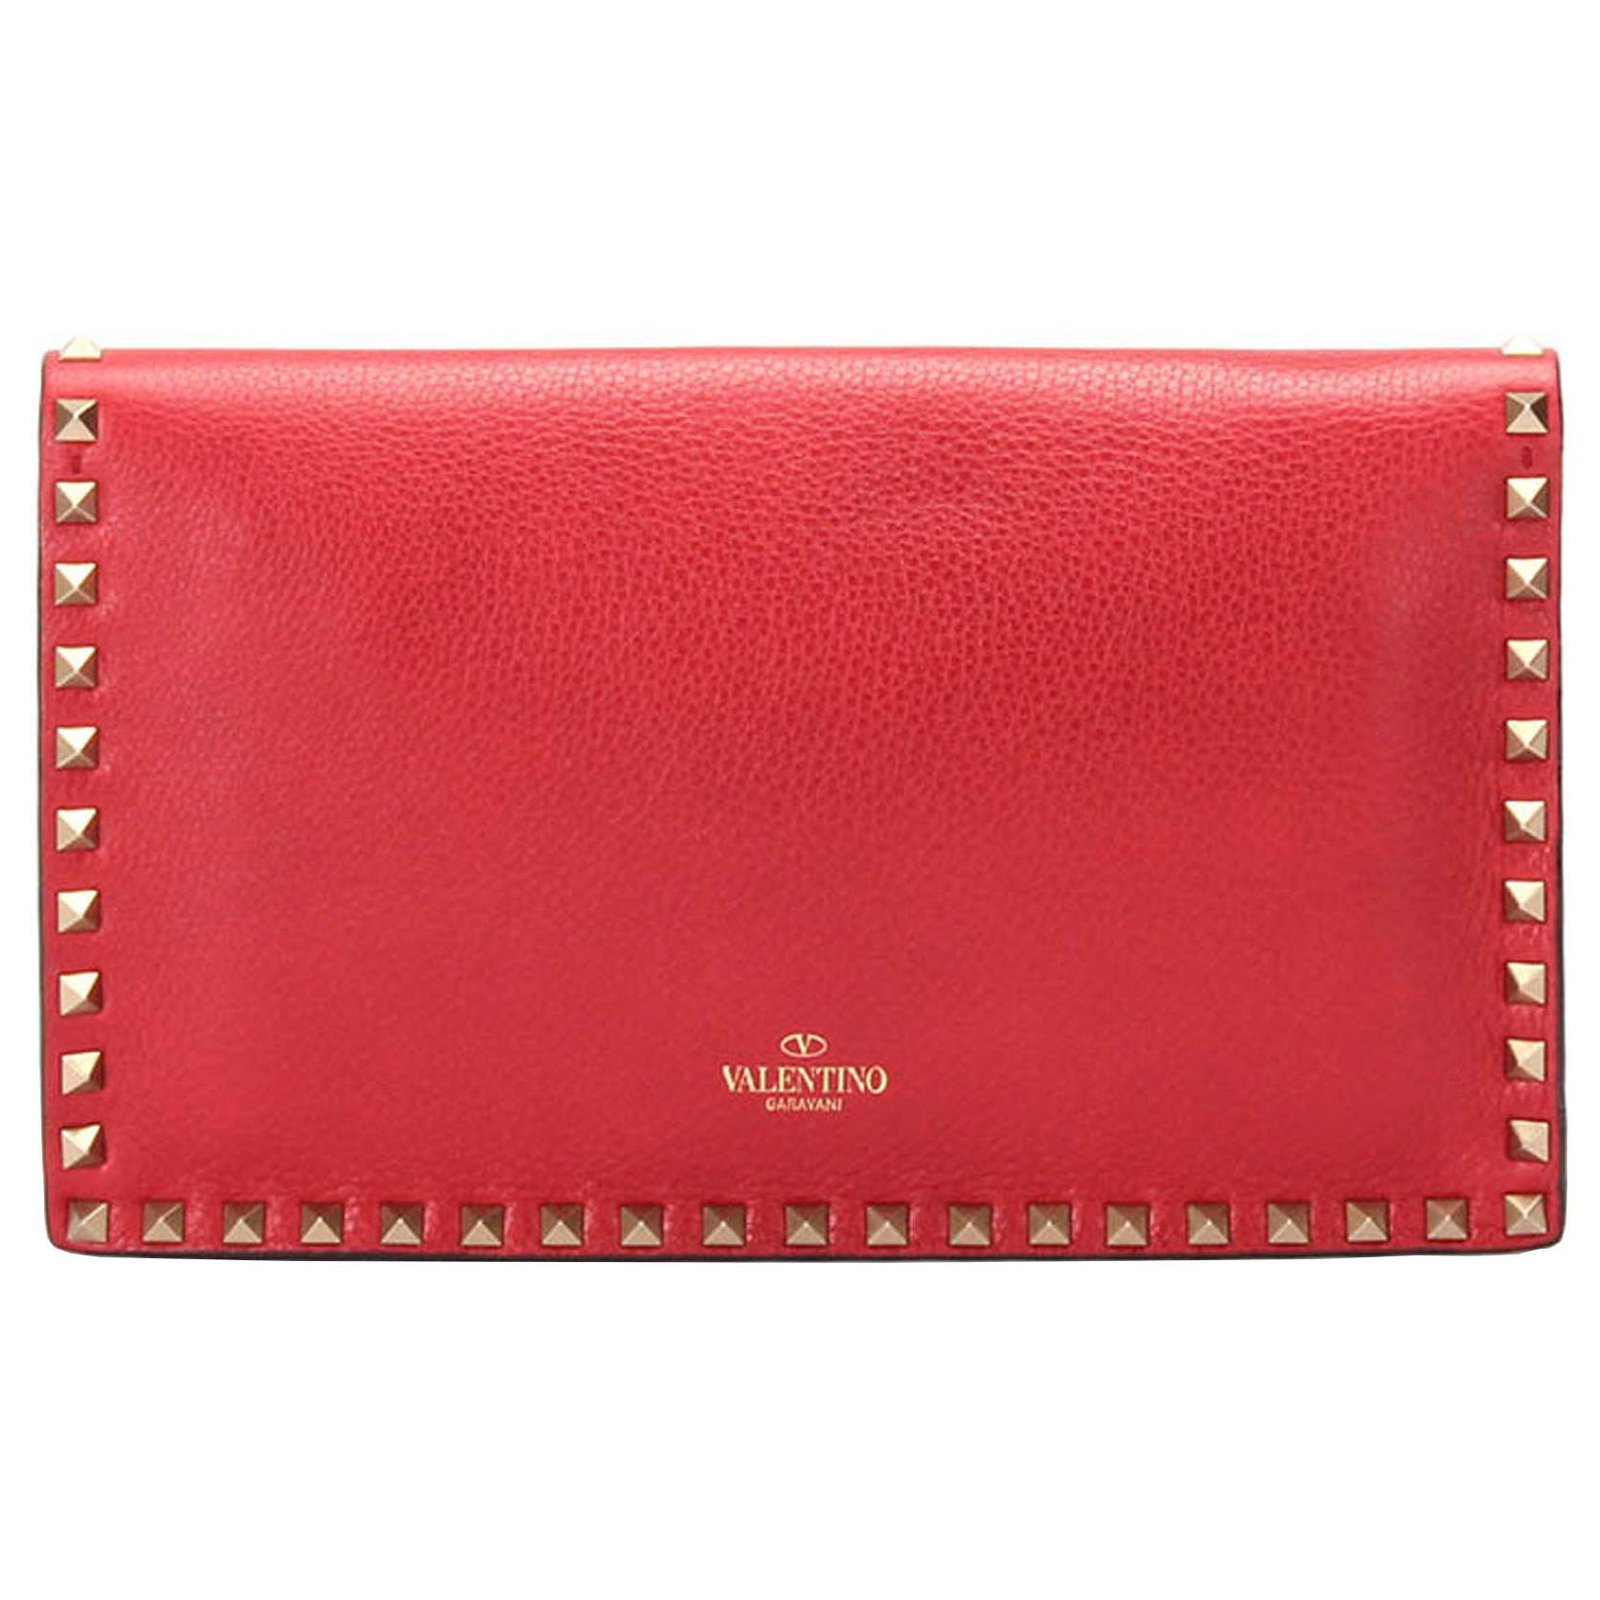 Rockstud leather clutch bag Valentino Garavani Red in Leather